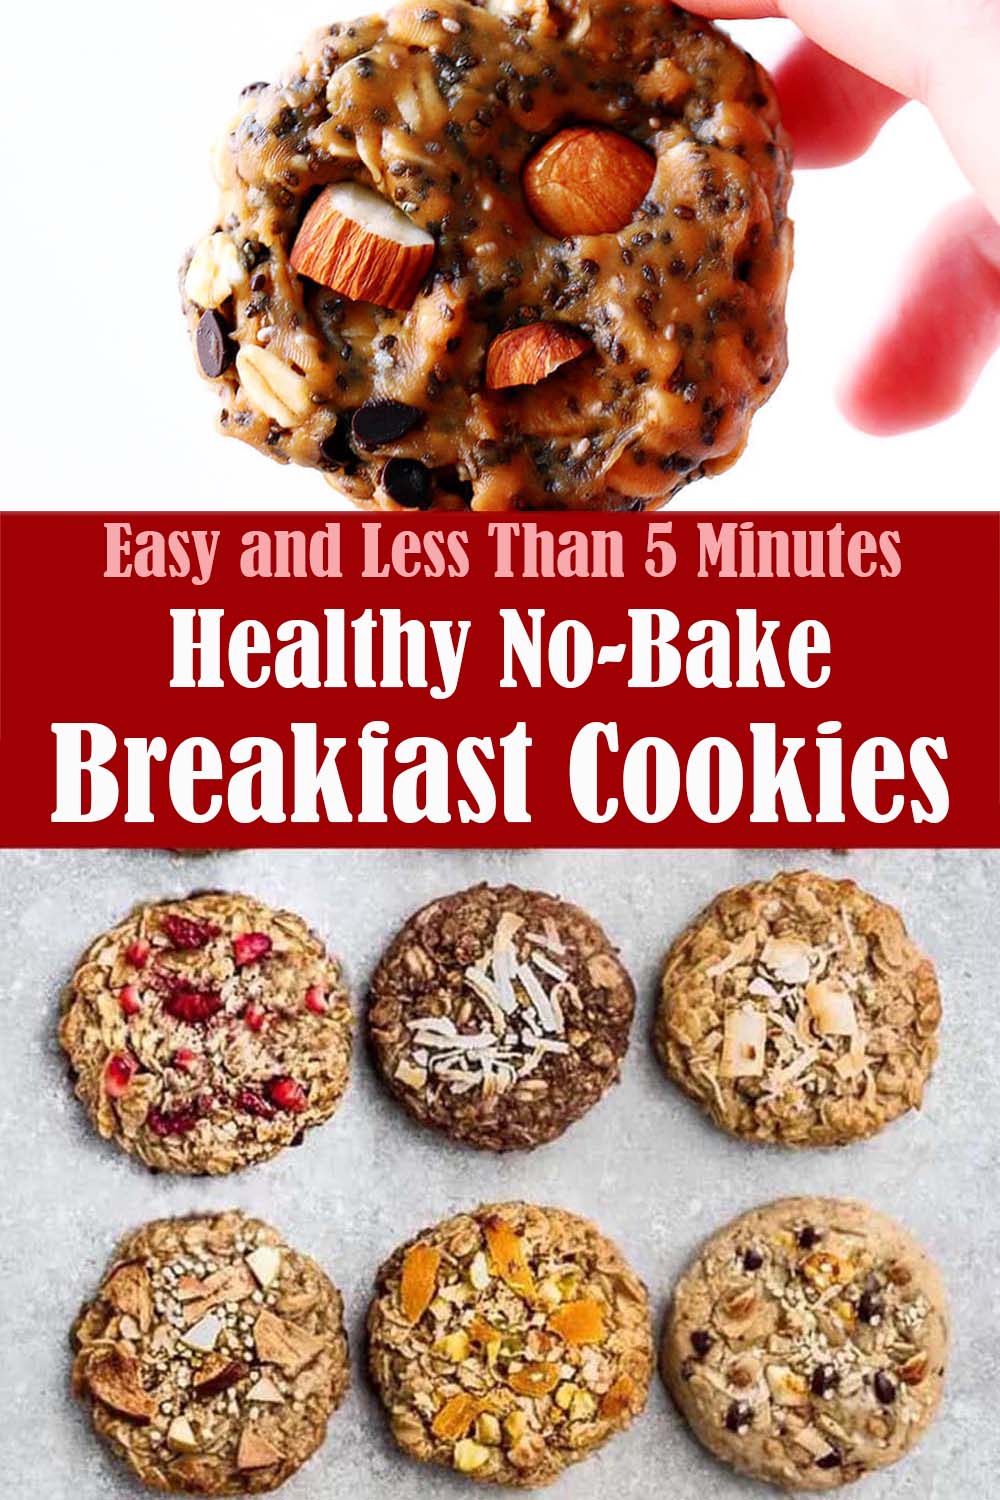 Healthy No-Bake Breakfast Cookies